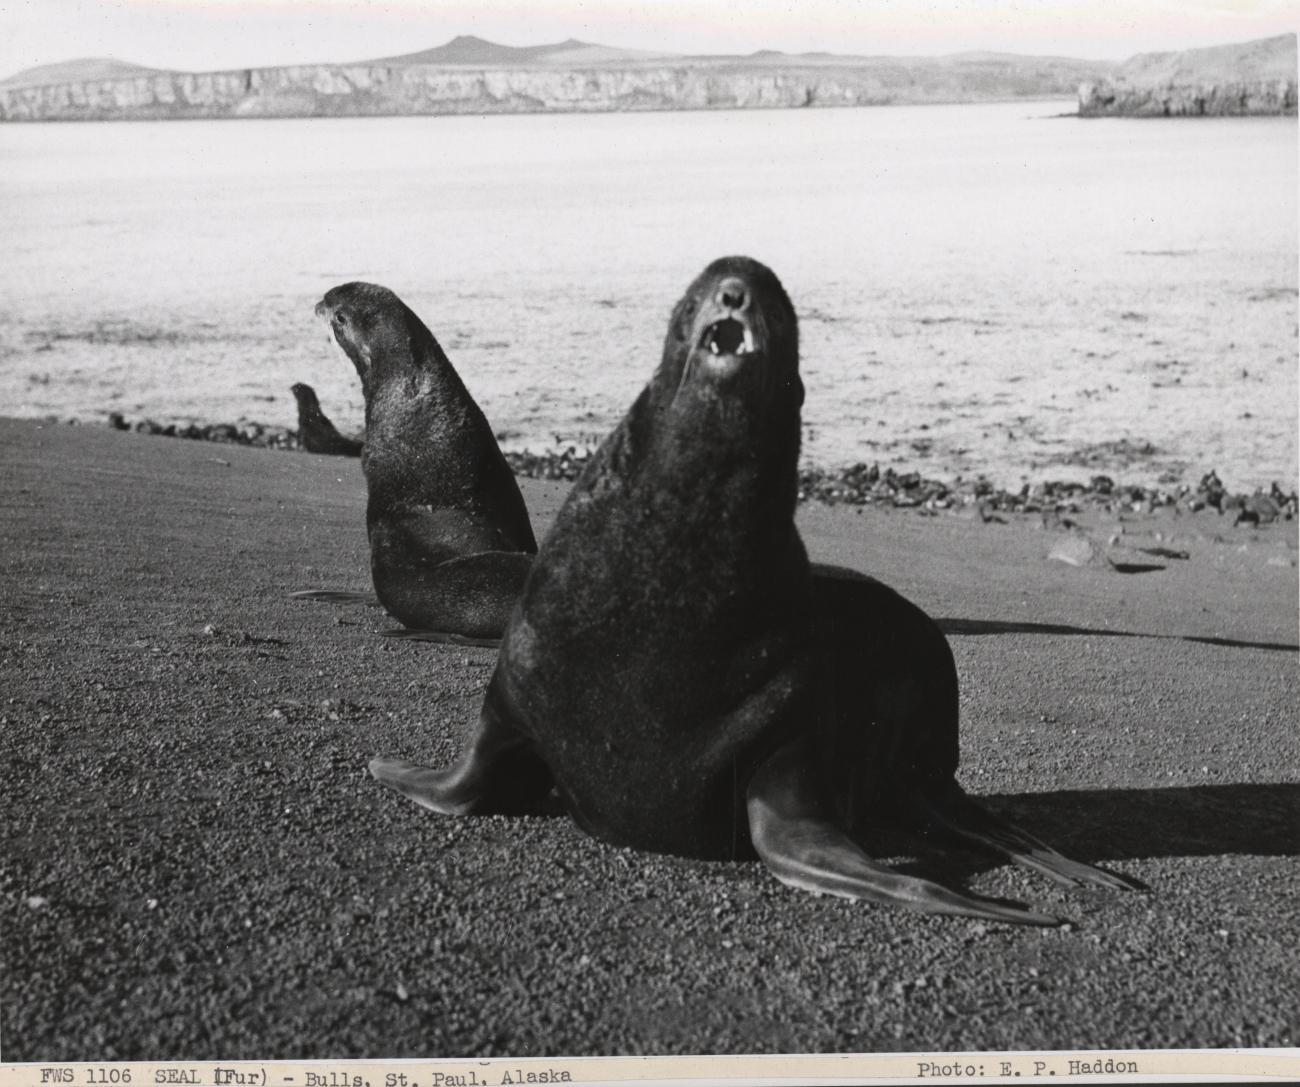 Bull fur seals on the beach